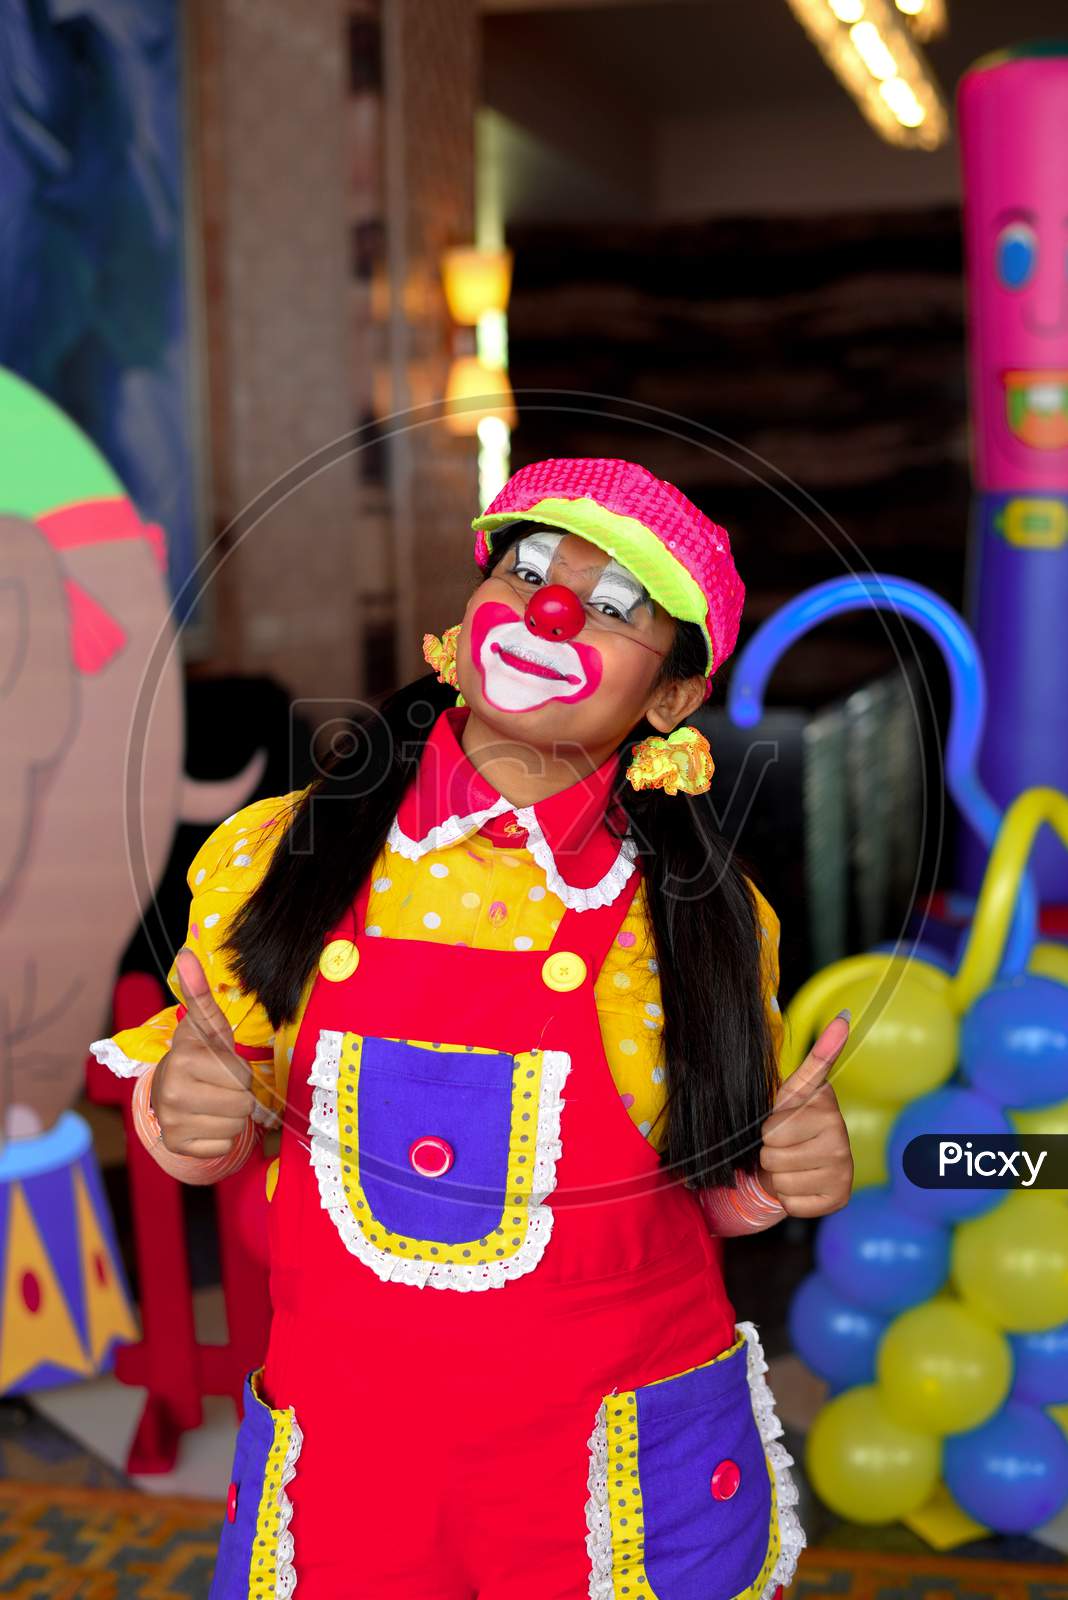 A female clown facing a camera and smiling pose